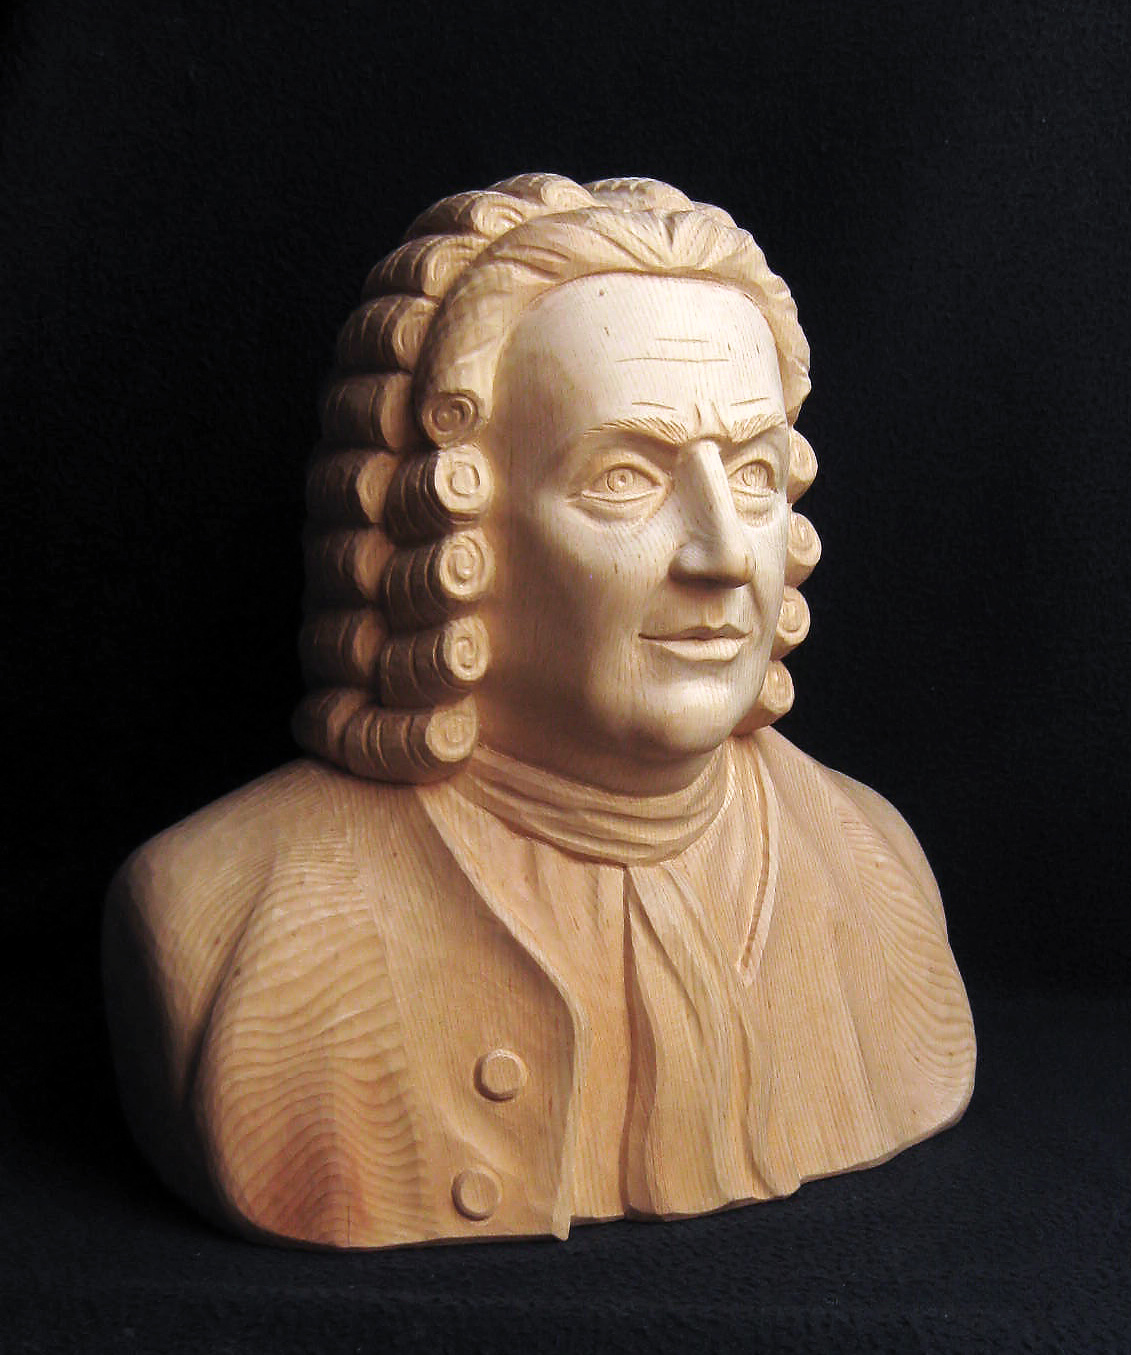 Bach in Arts - Bach Bust [Marco Corradini, 2016]